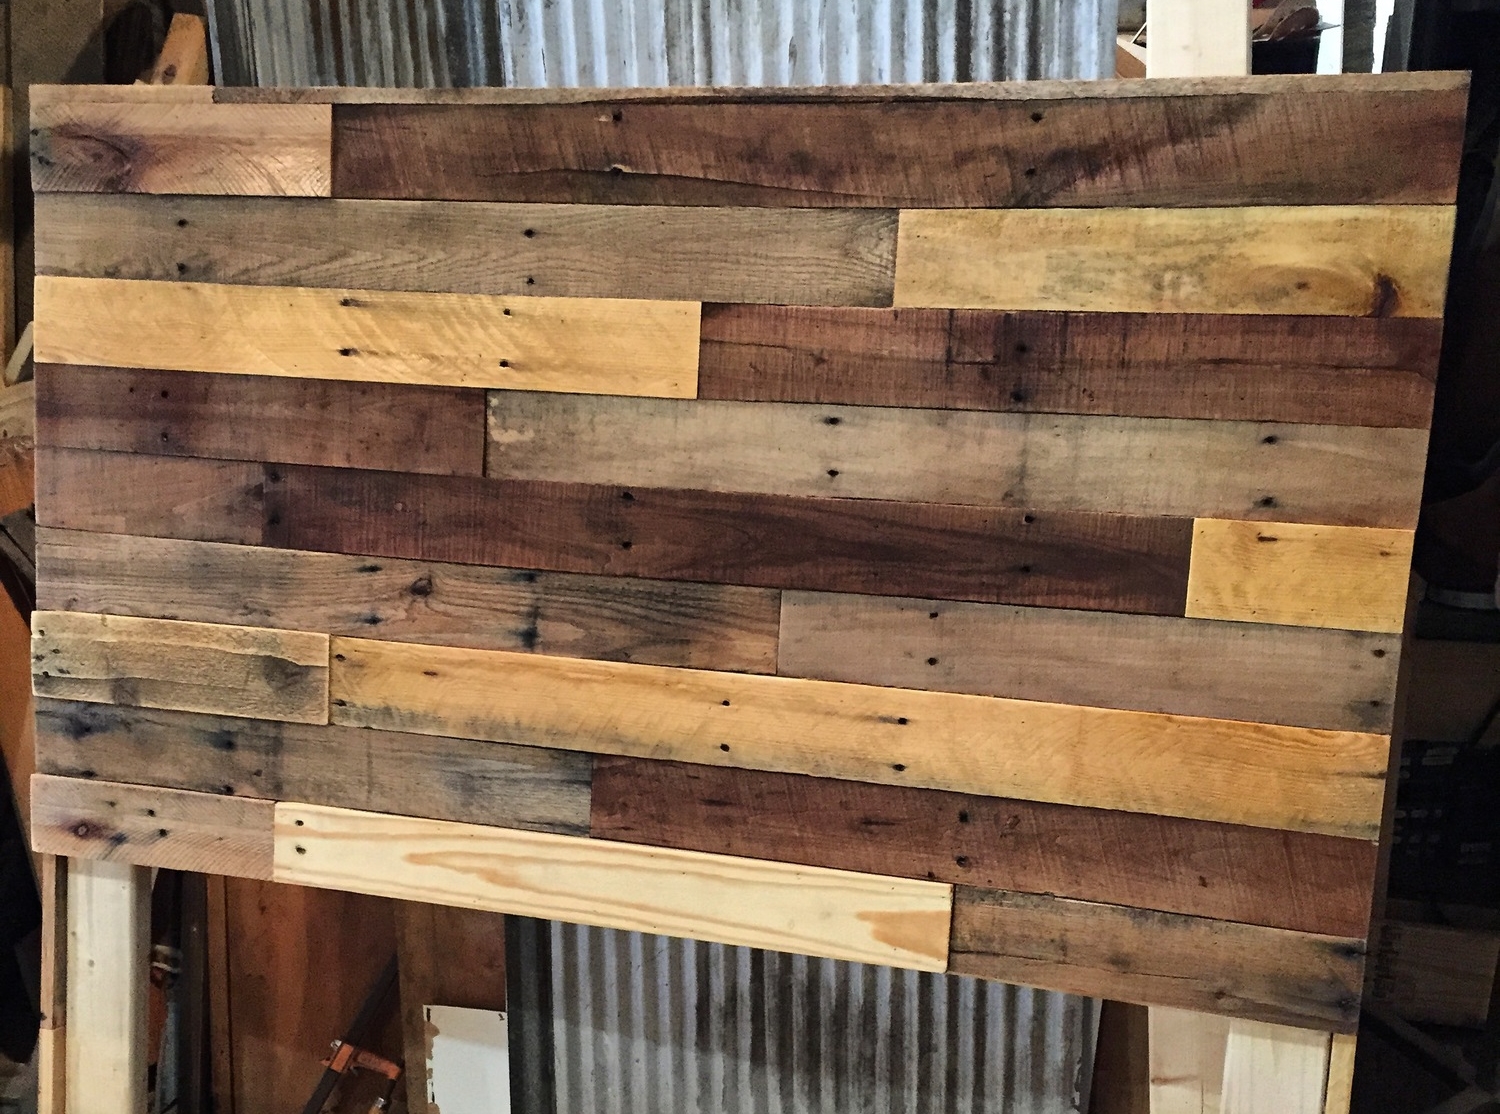 Pallet Wood Headboard Diy Revival, Build Bed Frame With Pallets